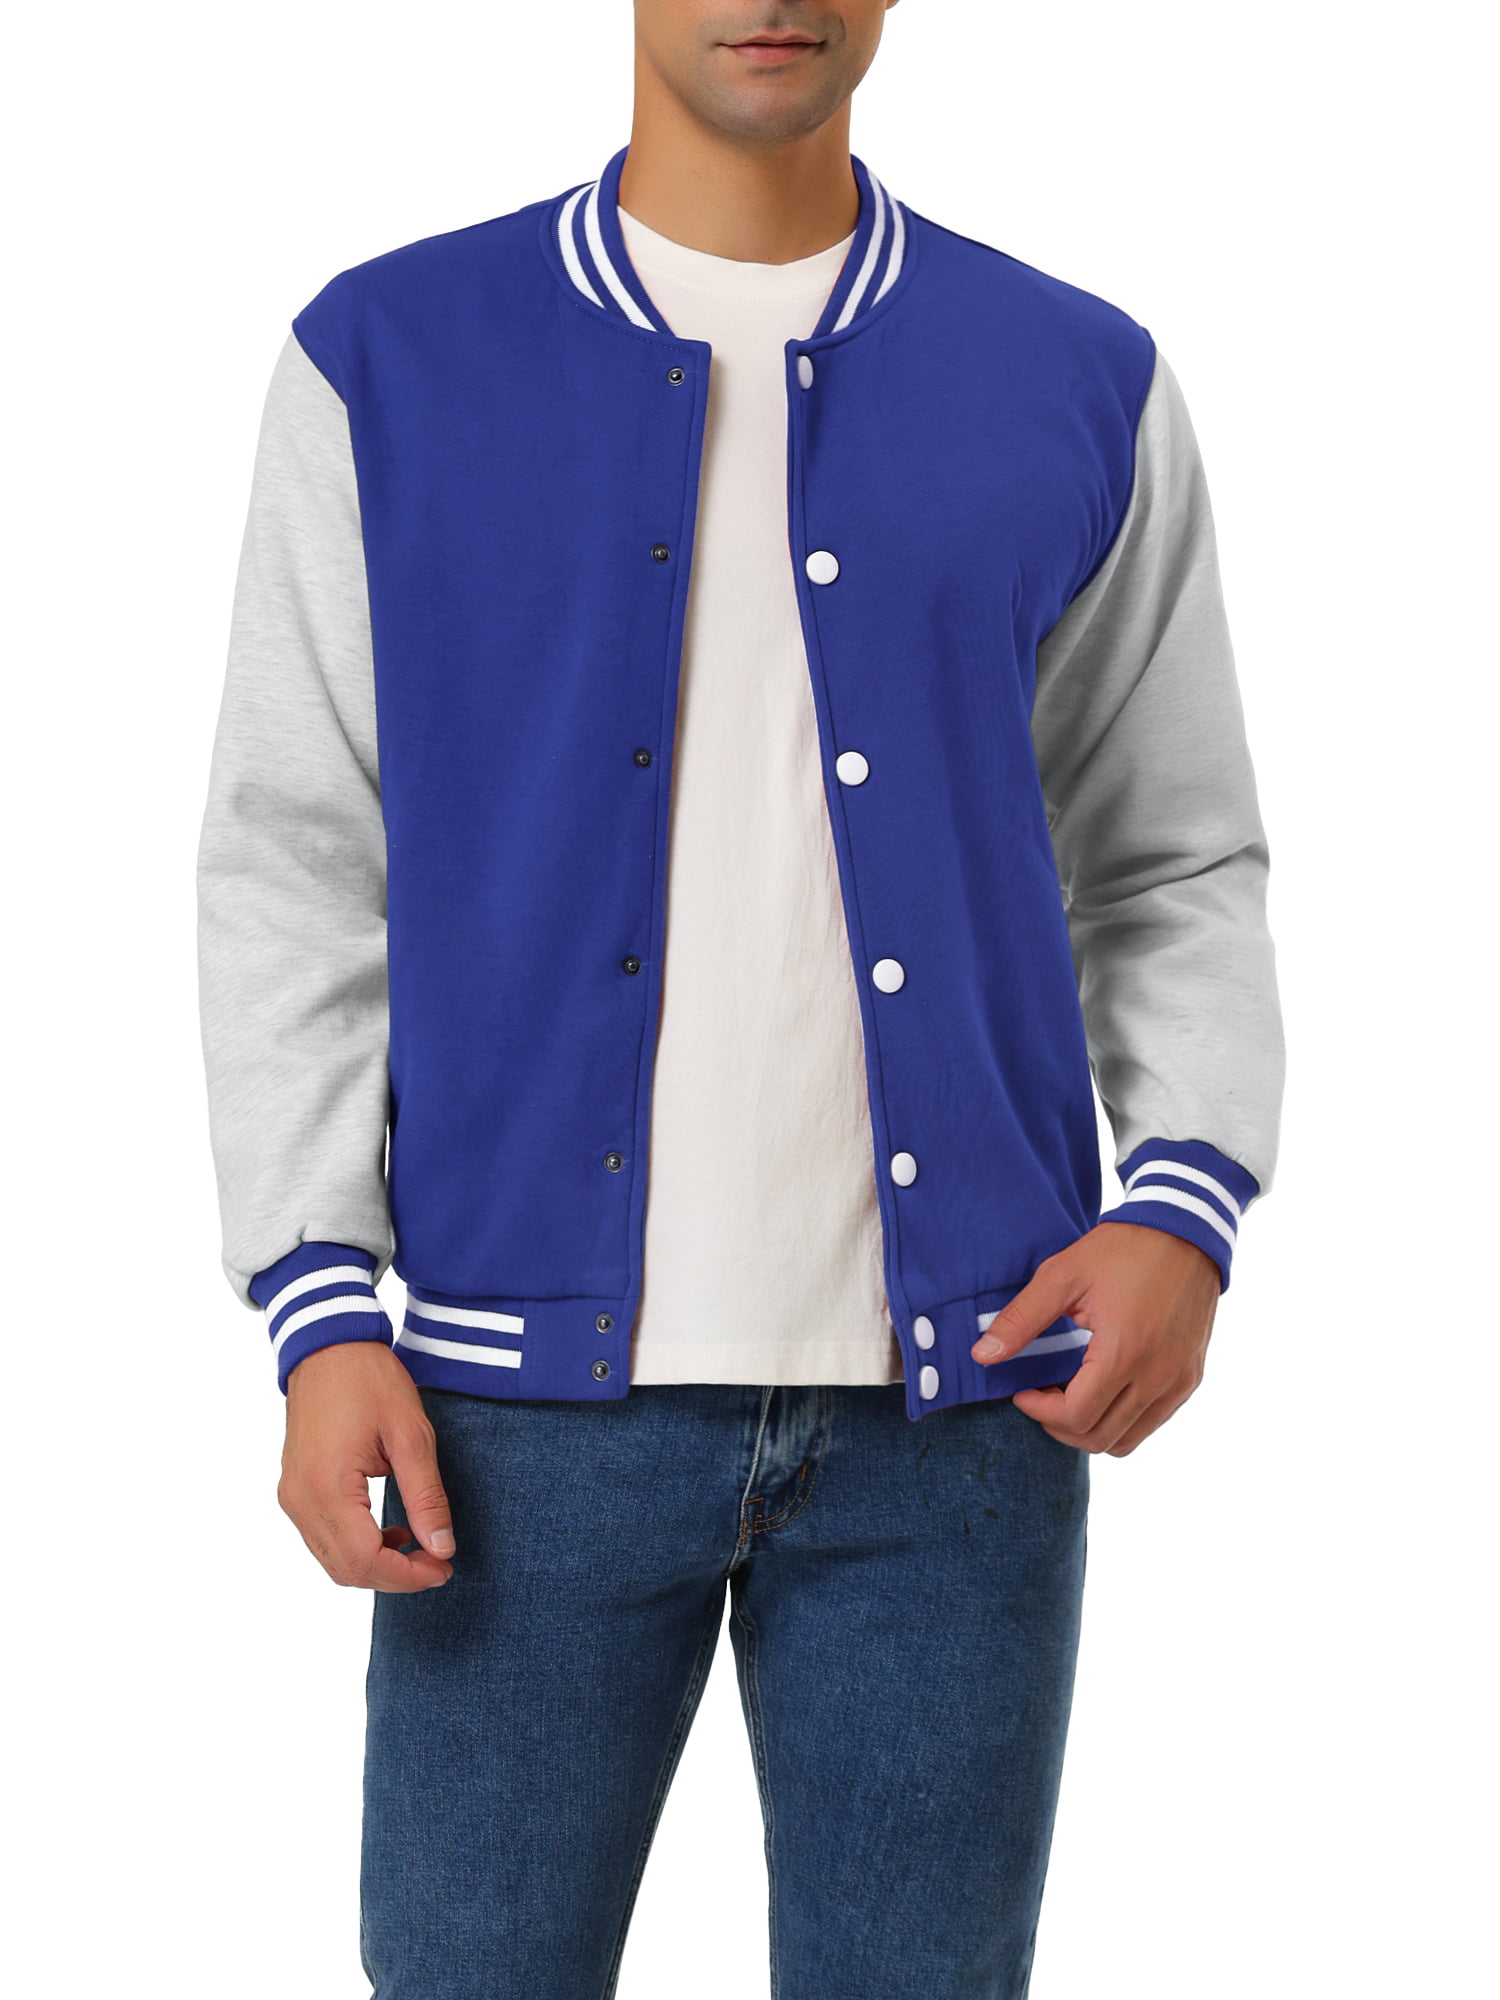 Varsity Jackets- Royal Blue Baseball Jackets for Men Online